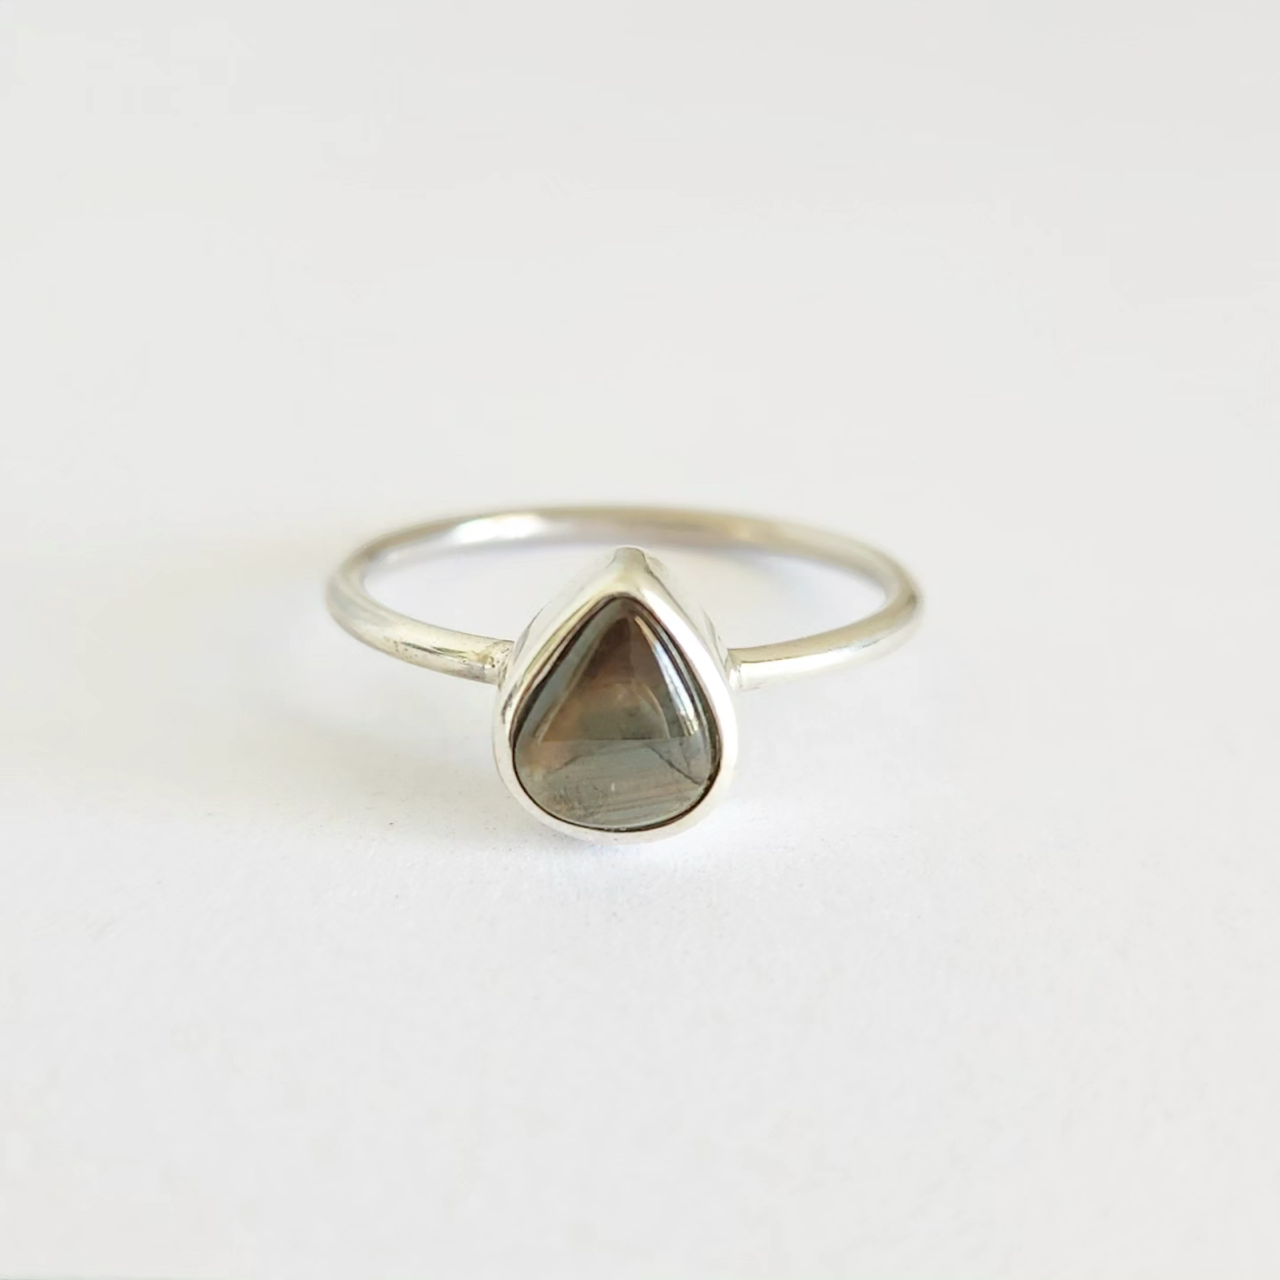 Tembeling Ring Bali Silver 925 Black Sapphire Stone